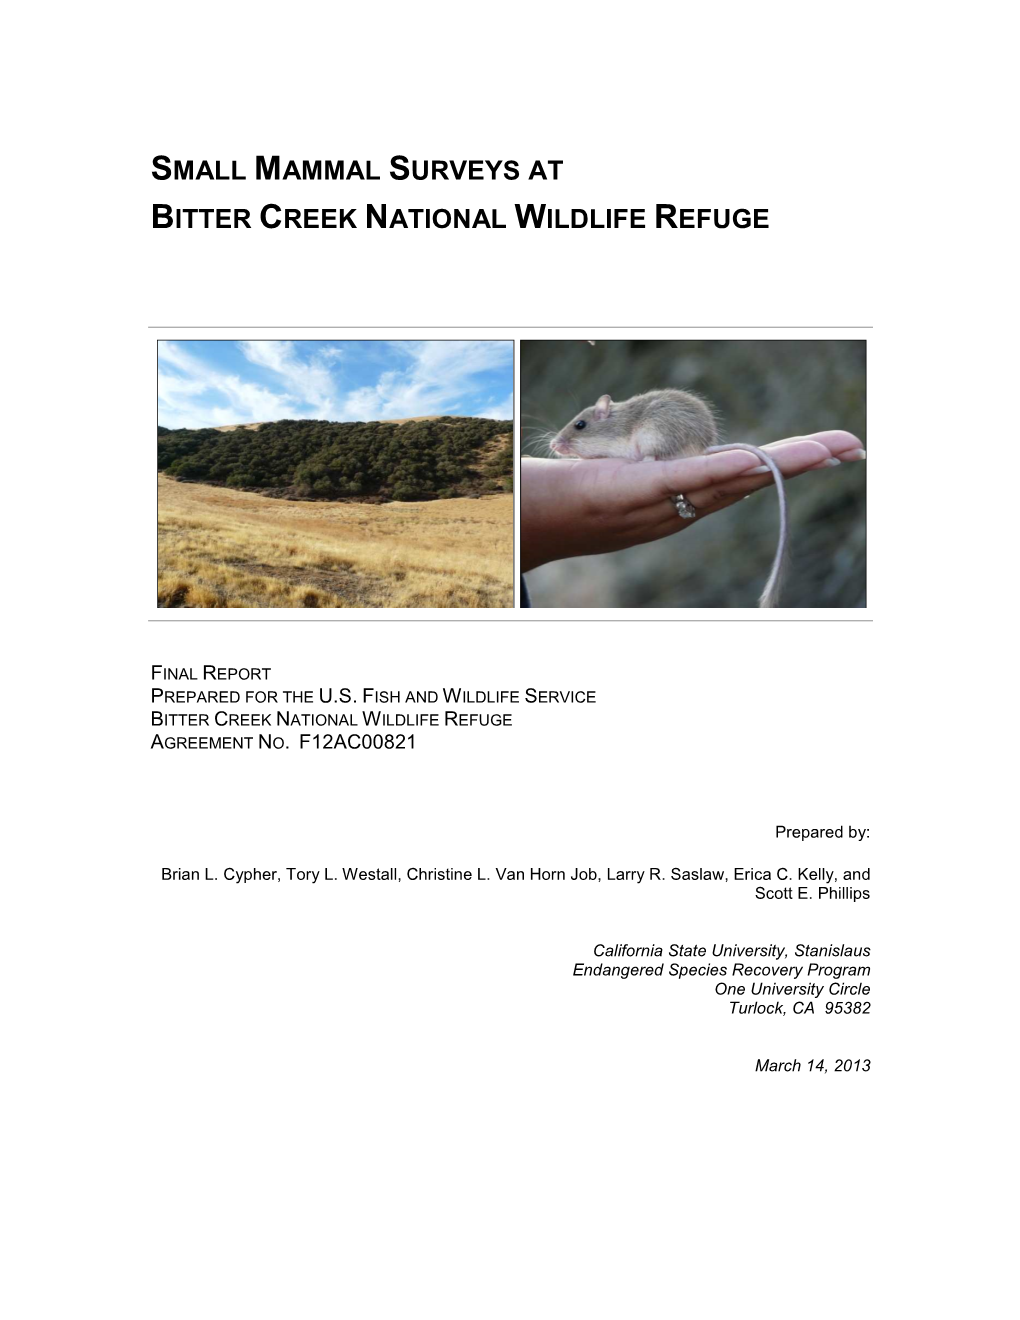 Small Mammal Surveys at Bitter Creek National Wildlife Refuge